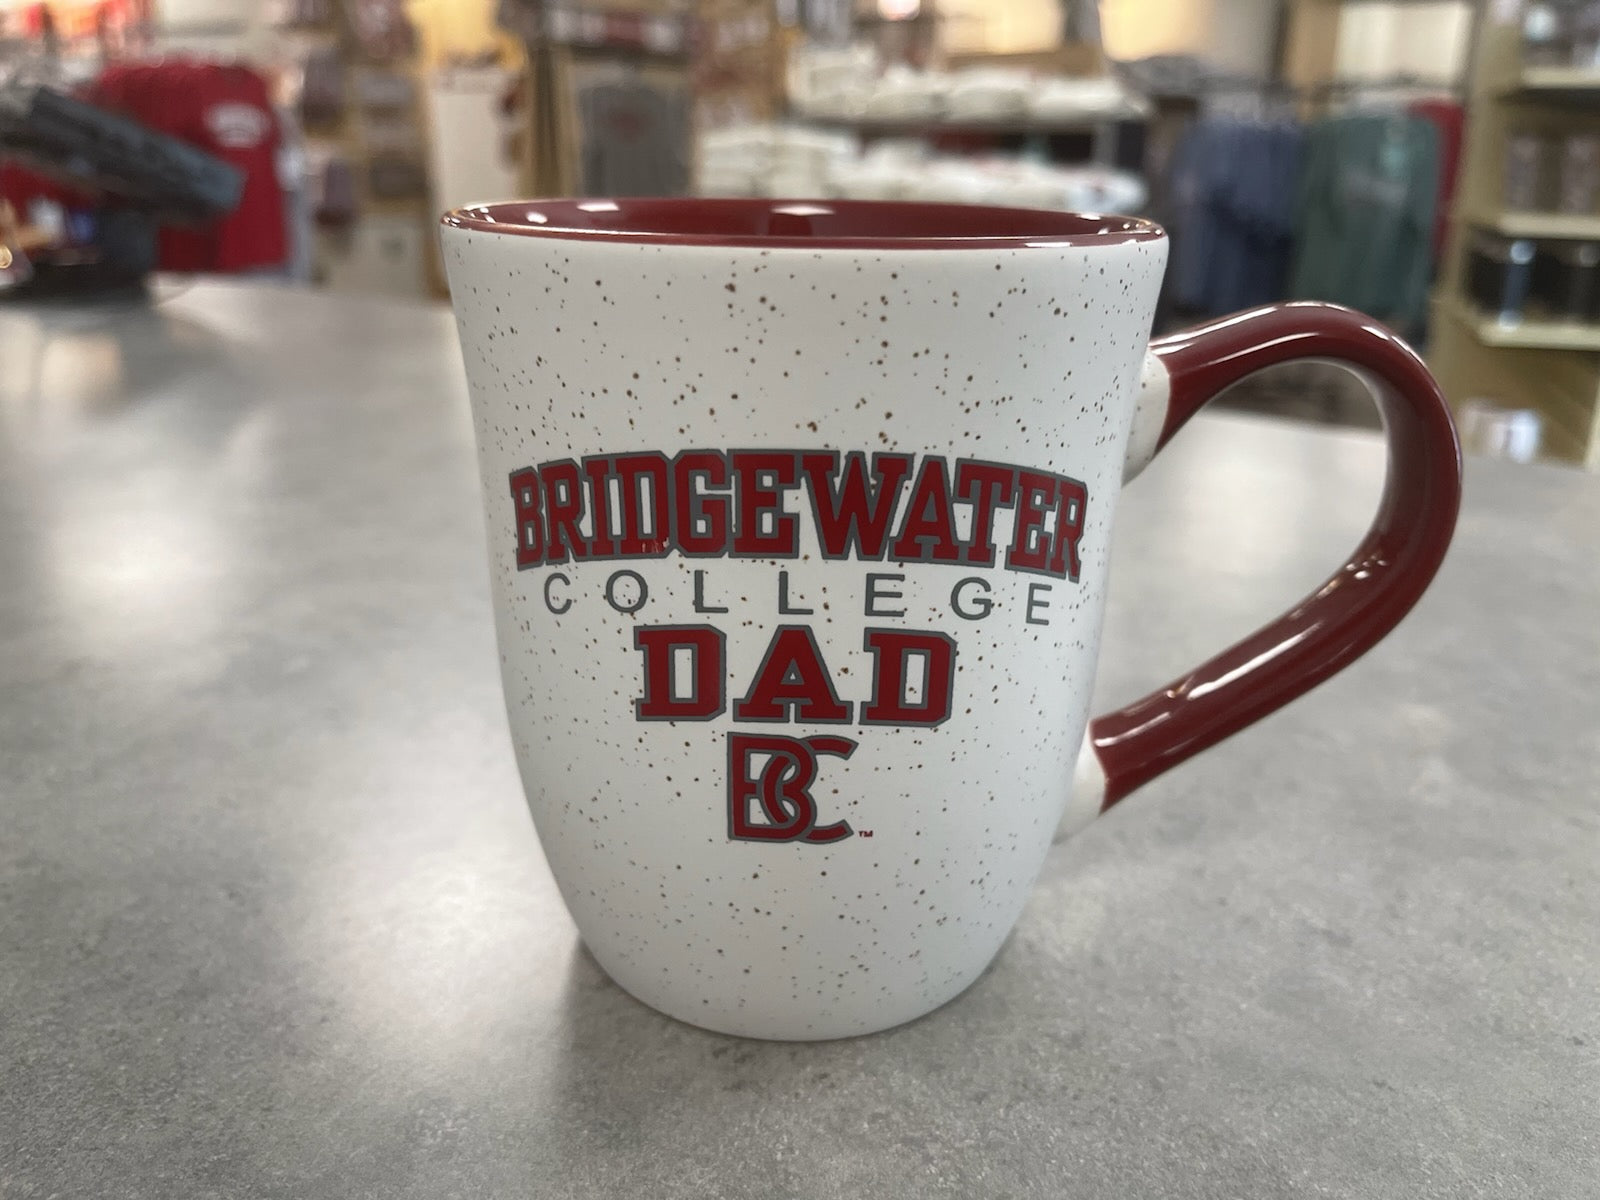 Bridgewater College Dad Ceramic Mug by RSFJ